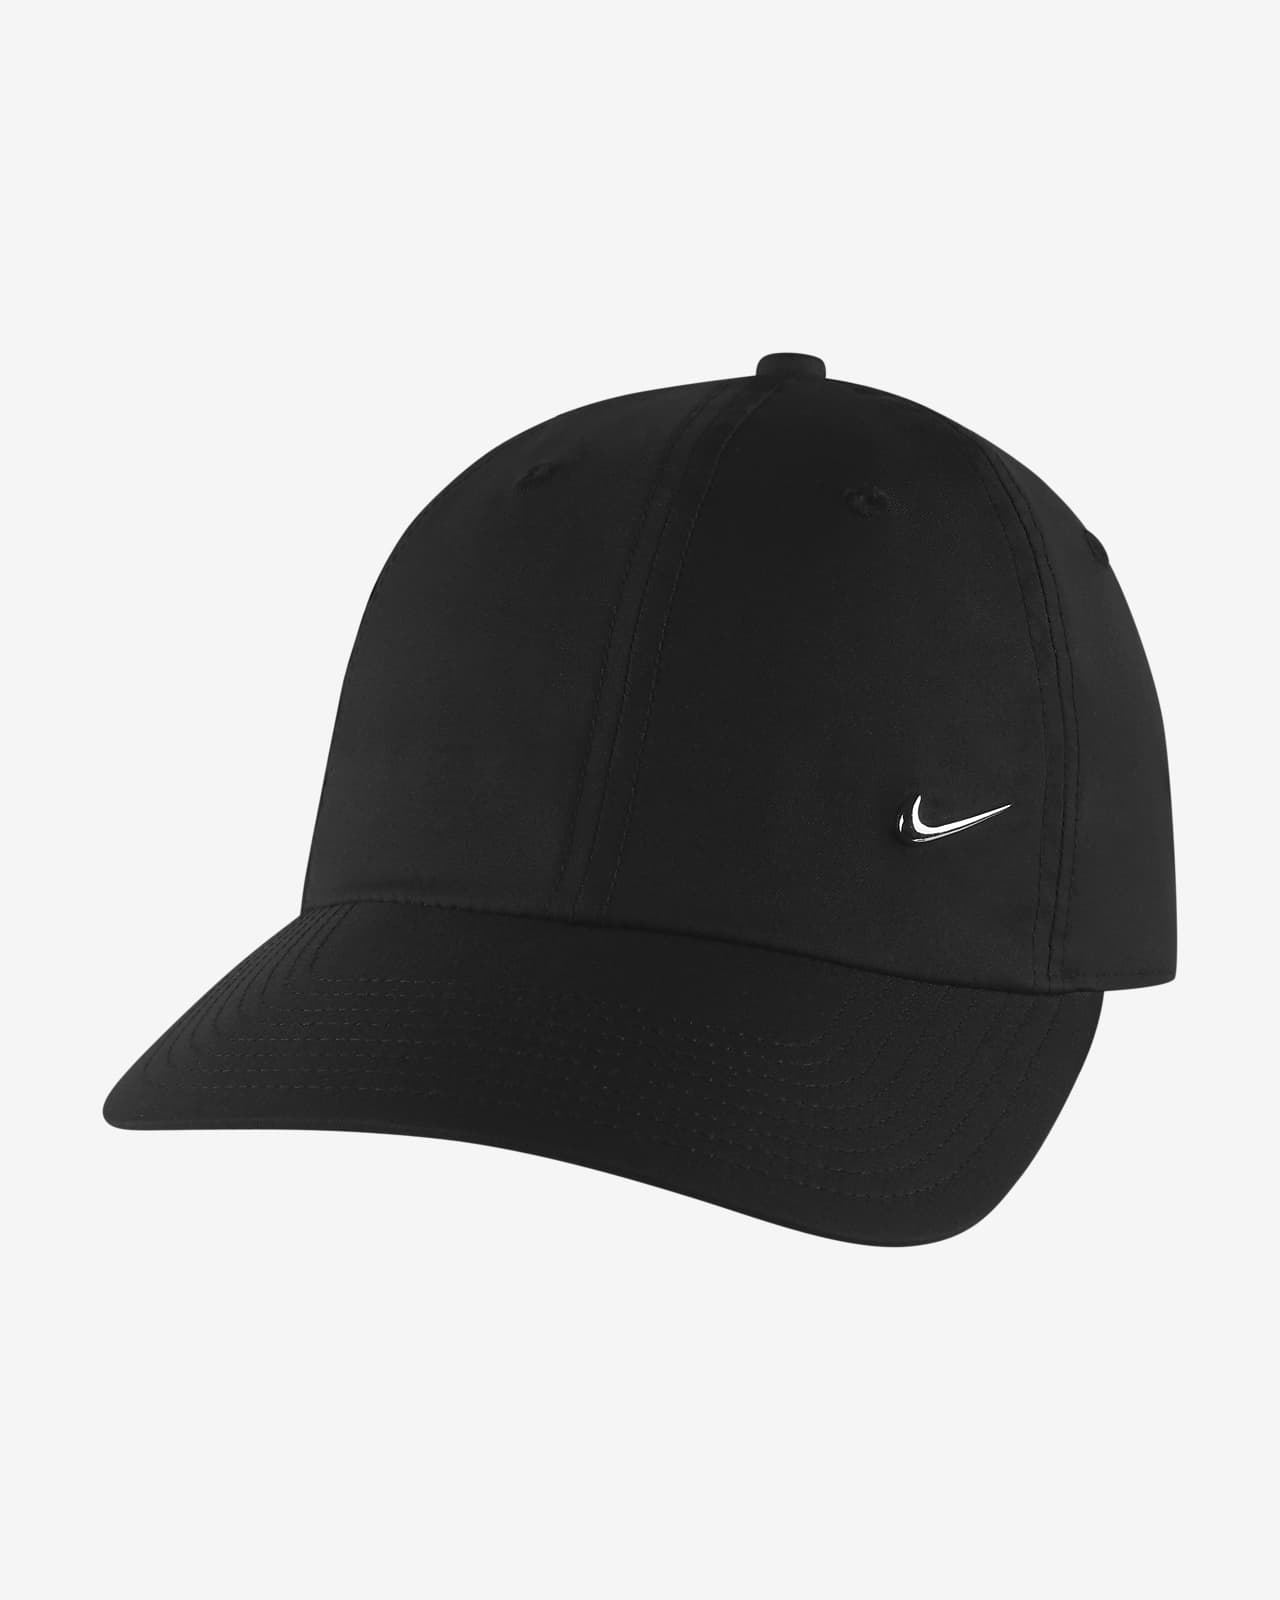 Nike Sportswear Heritage 86 帽款